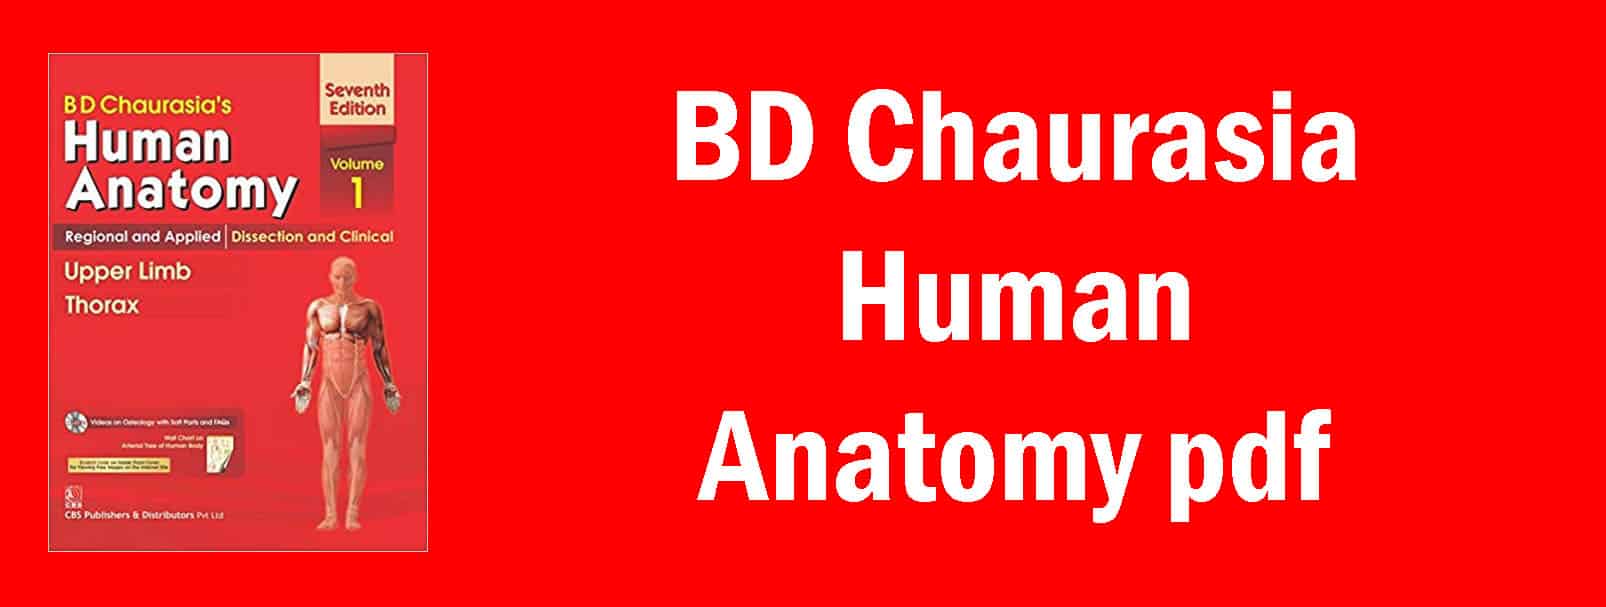 Download BD Chaurasia Human Anatomy pdf